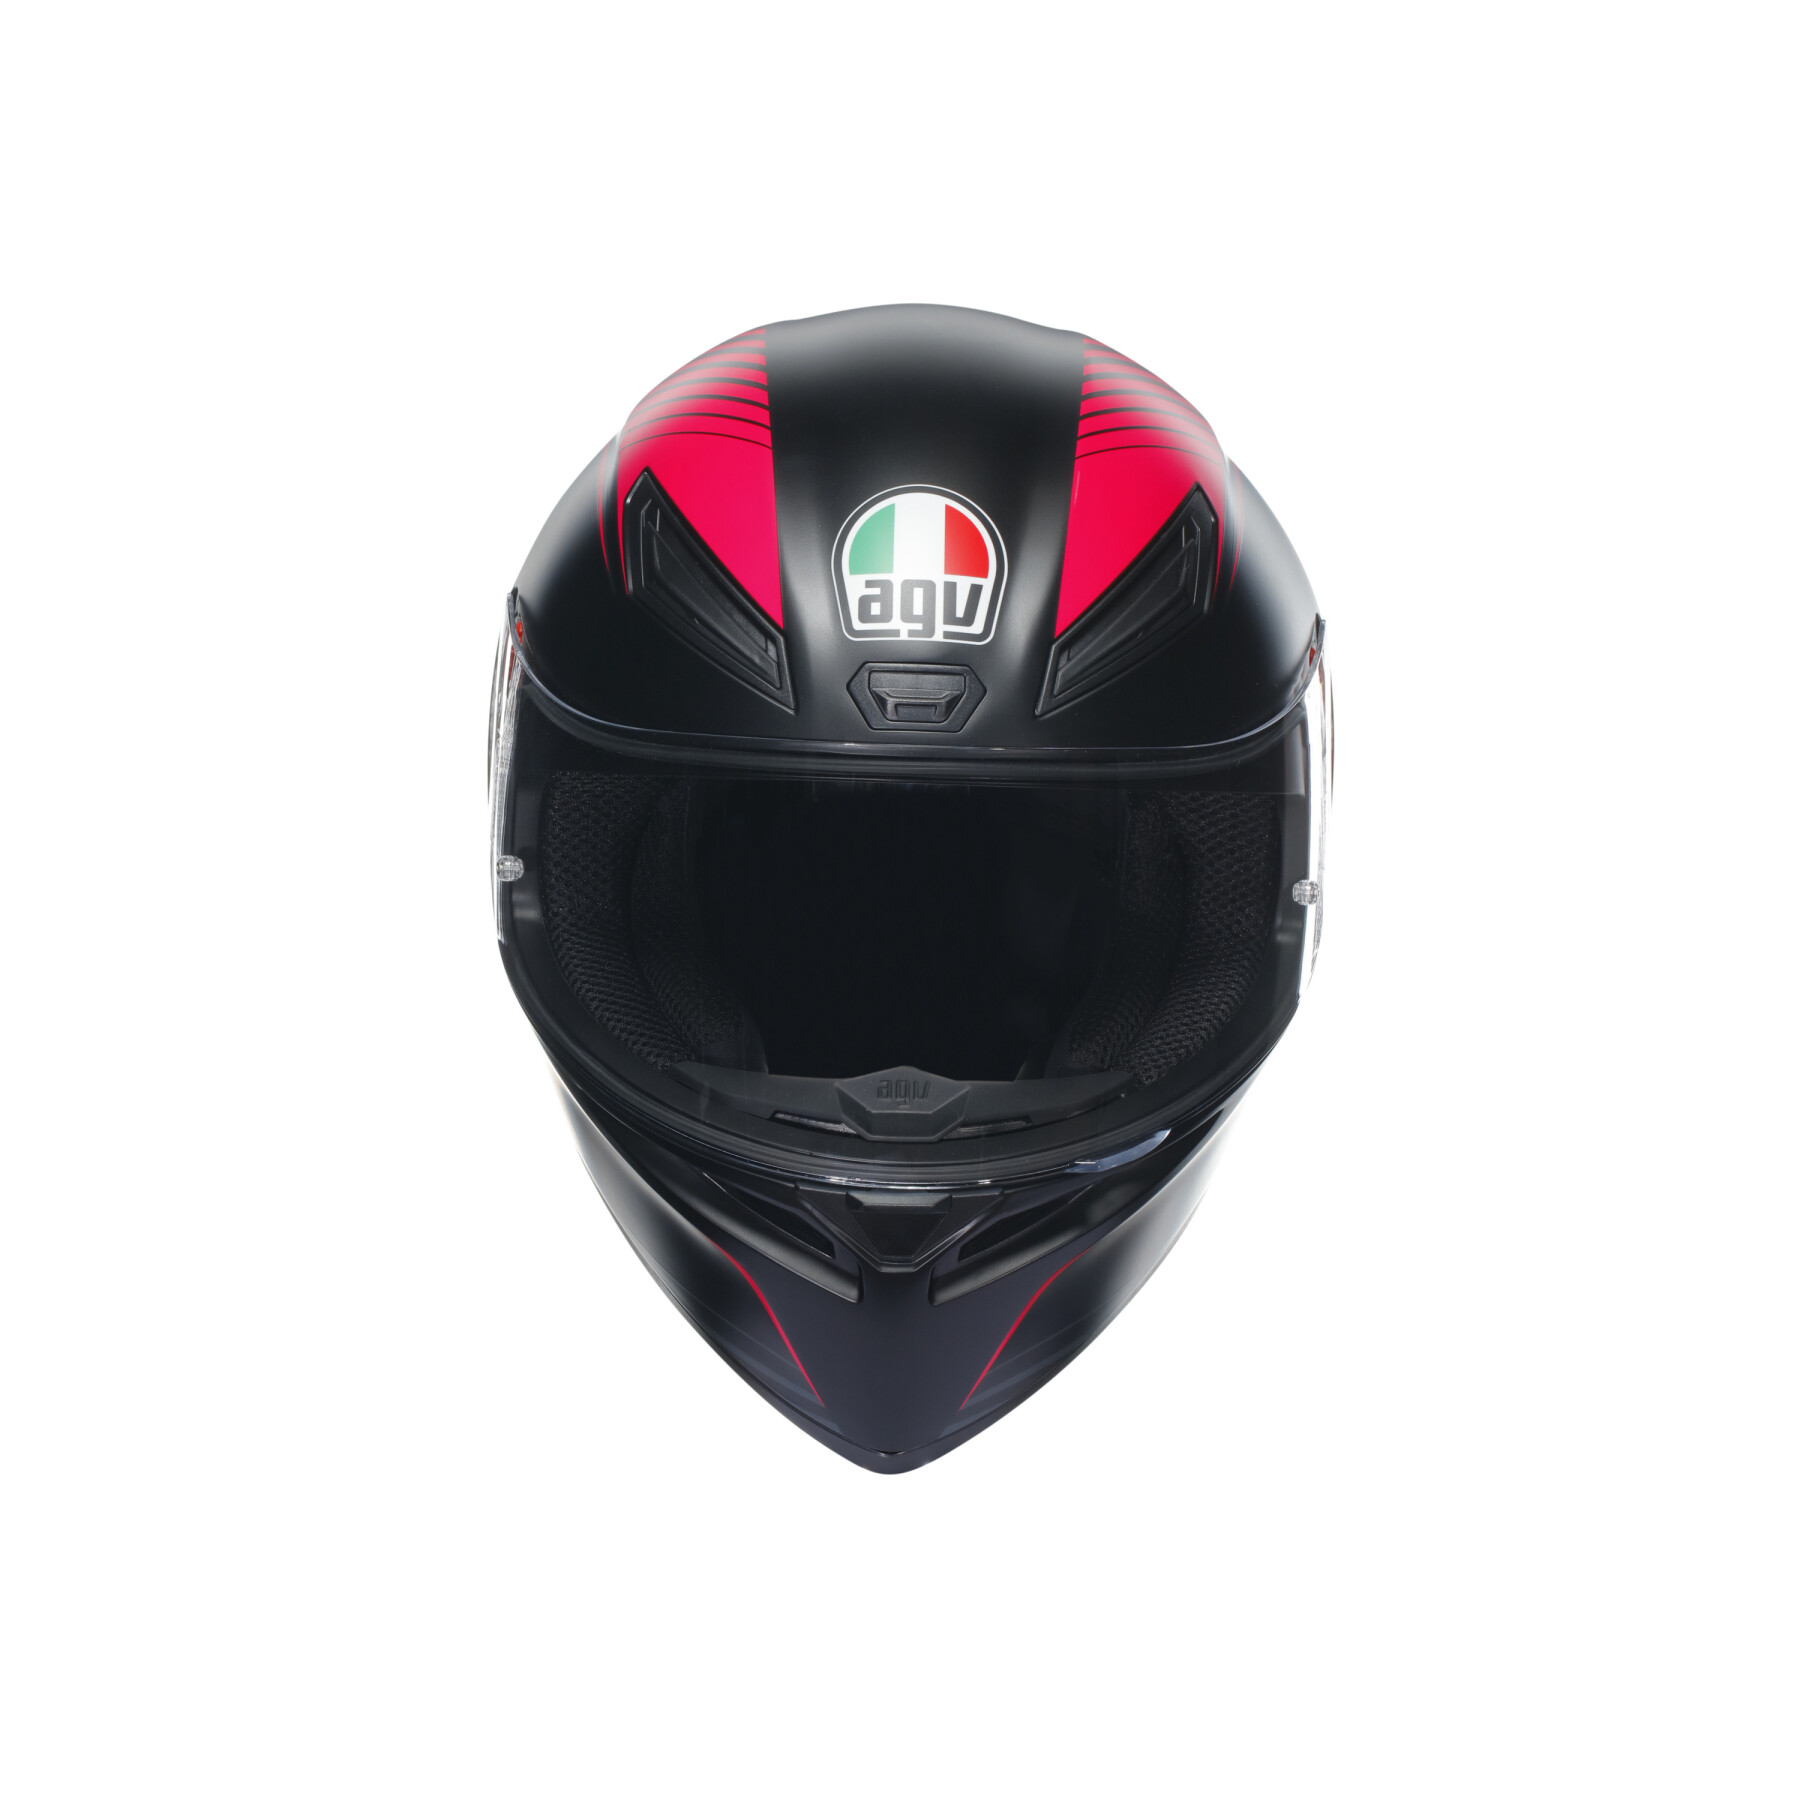 Full face motorcycle helmet AGV K1 S Warmup